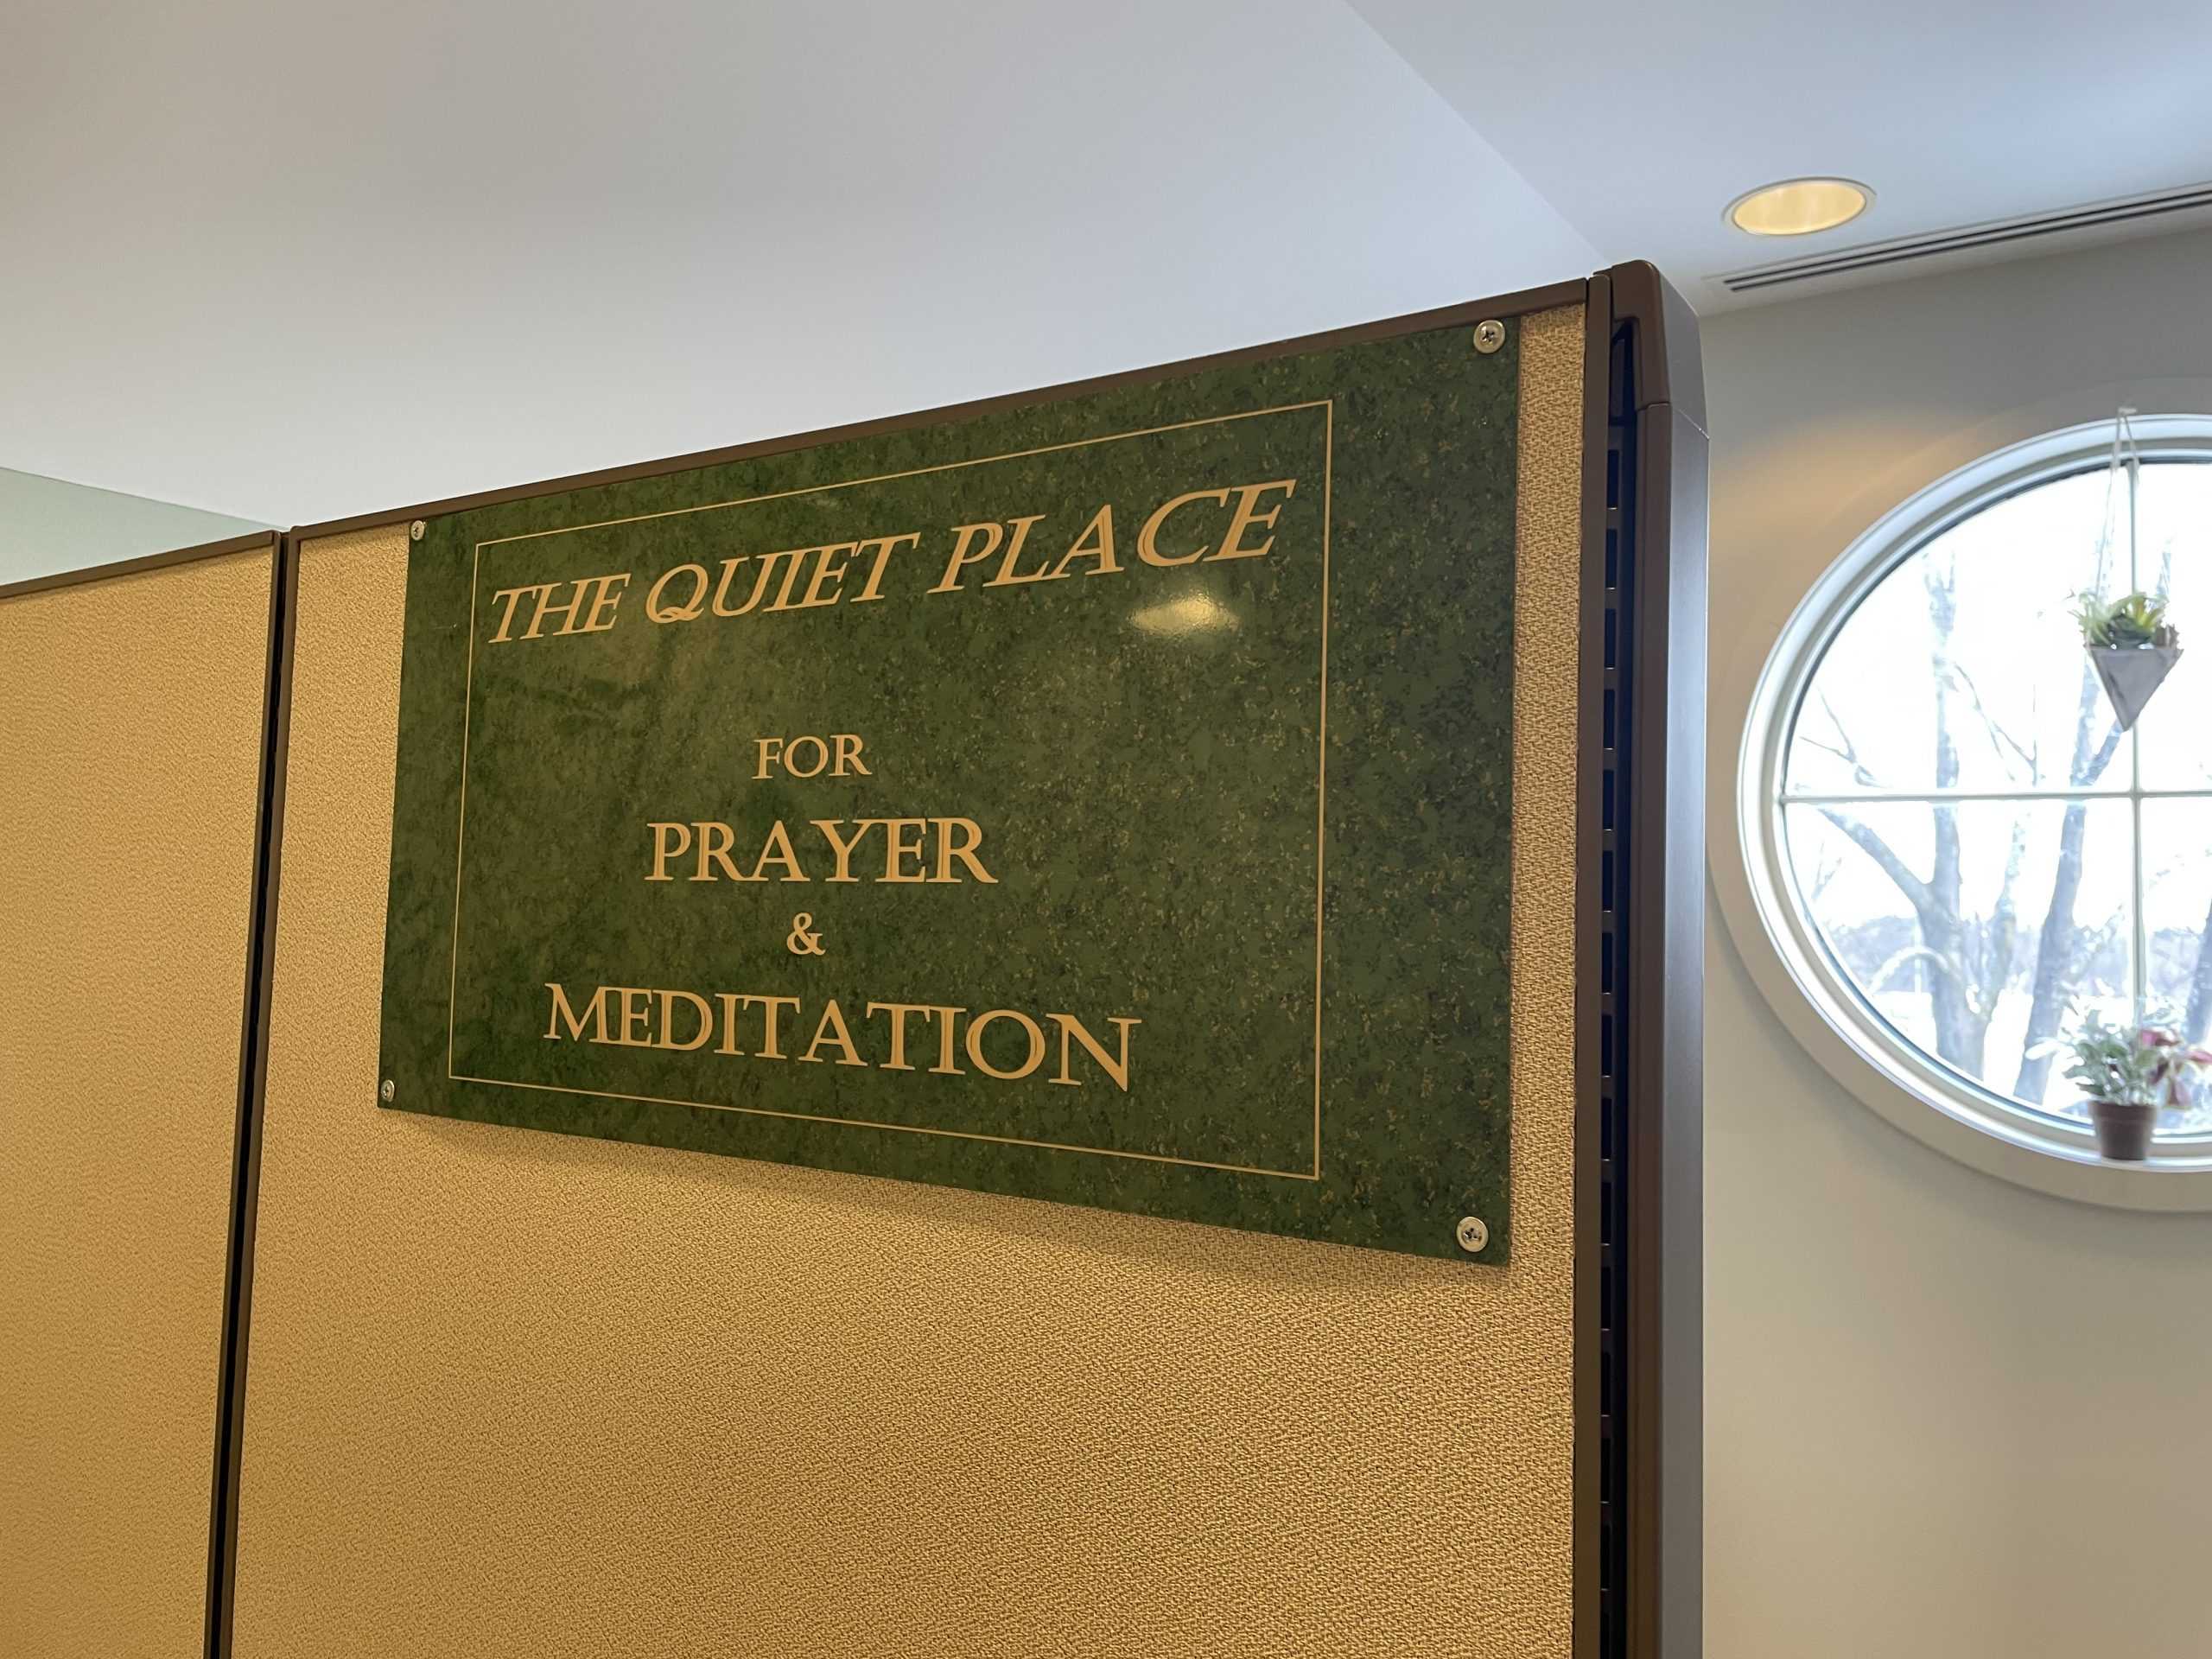 New+Meditation%2C+Prayer+Space+Opens+for+all+Faiths